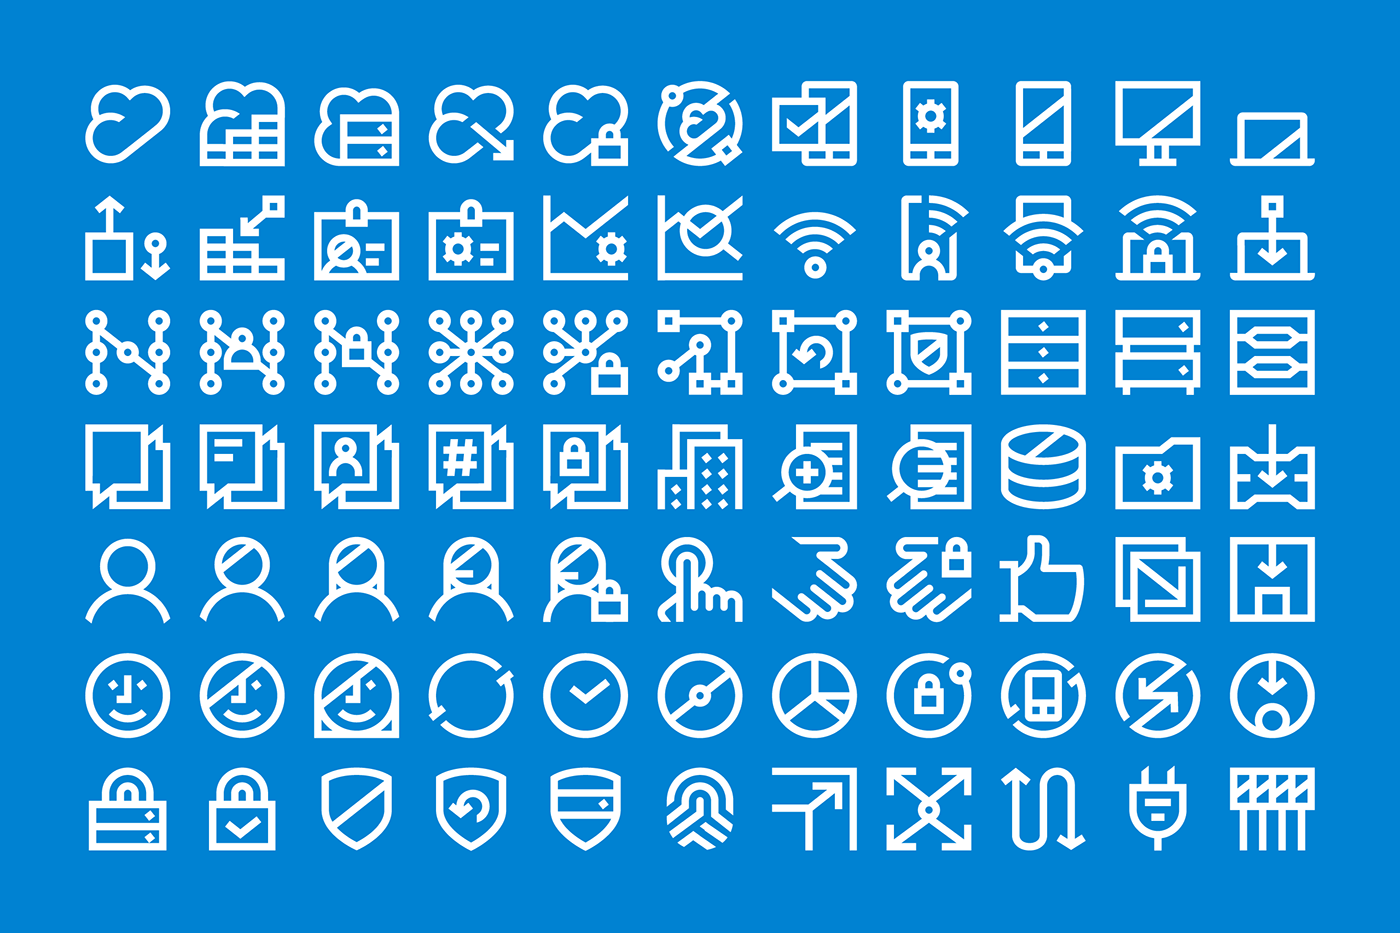 Icon icons minimal blue dell corporate identity icongrapher barcelona Y&R sintesis